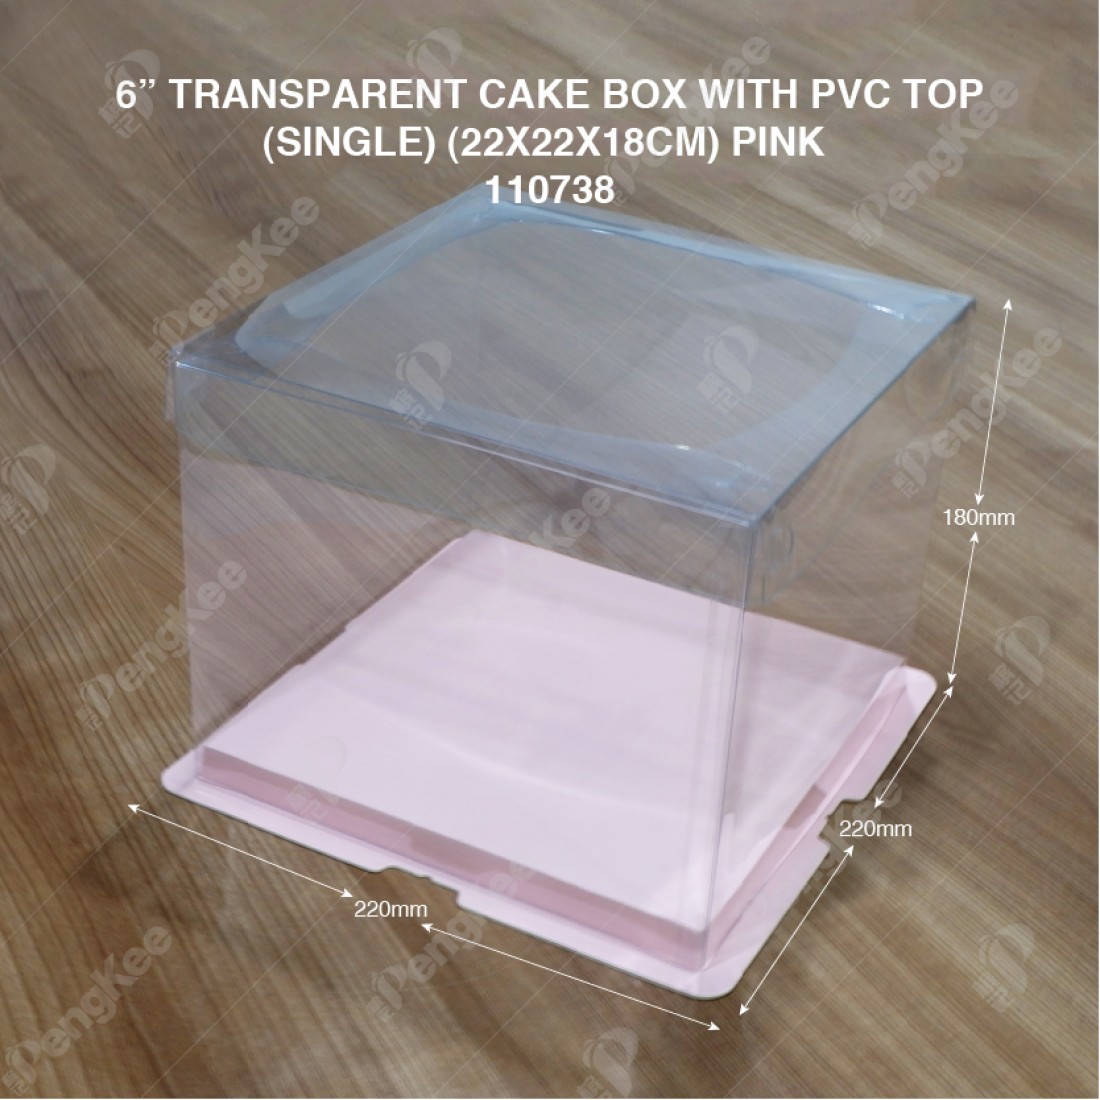 6" TRANSPARENT CAKE BOX WITH PVC TOP(SINGLE) (22*22*18CM)- PINK